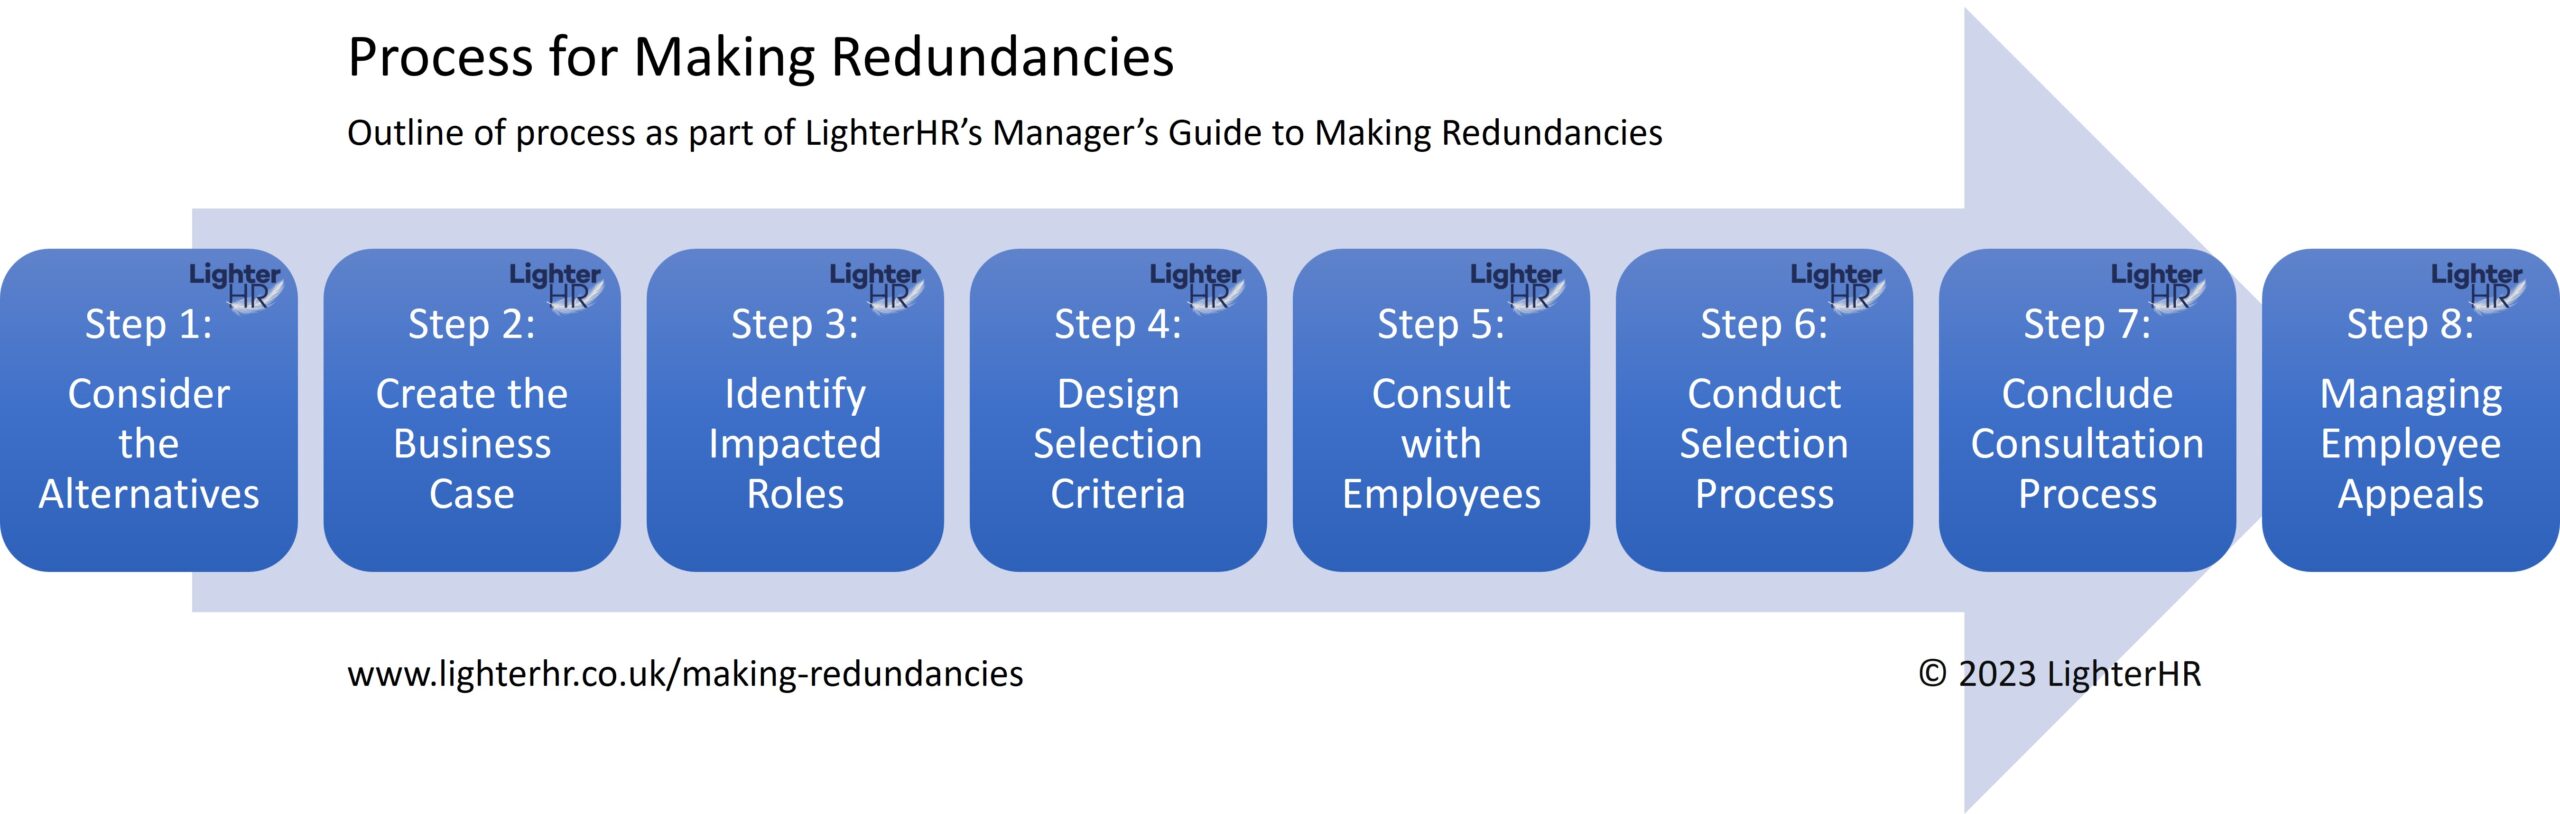 Process for Making Redundancies - LighterHR